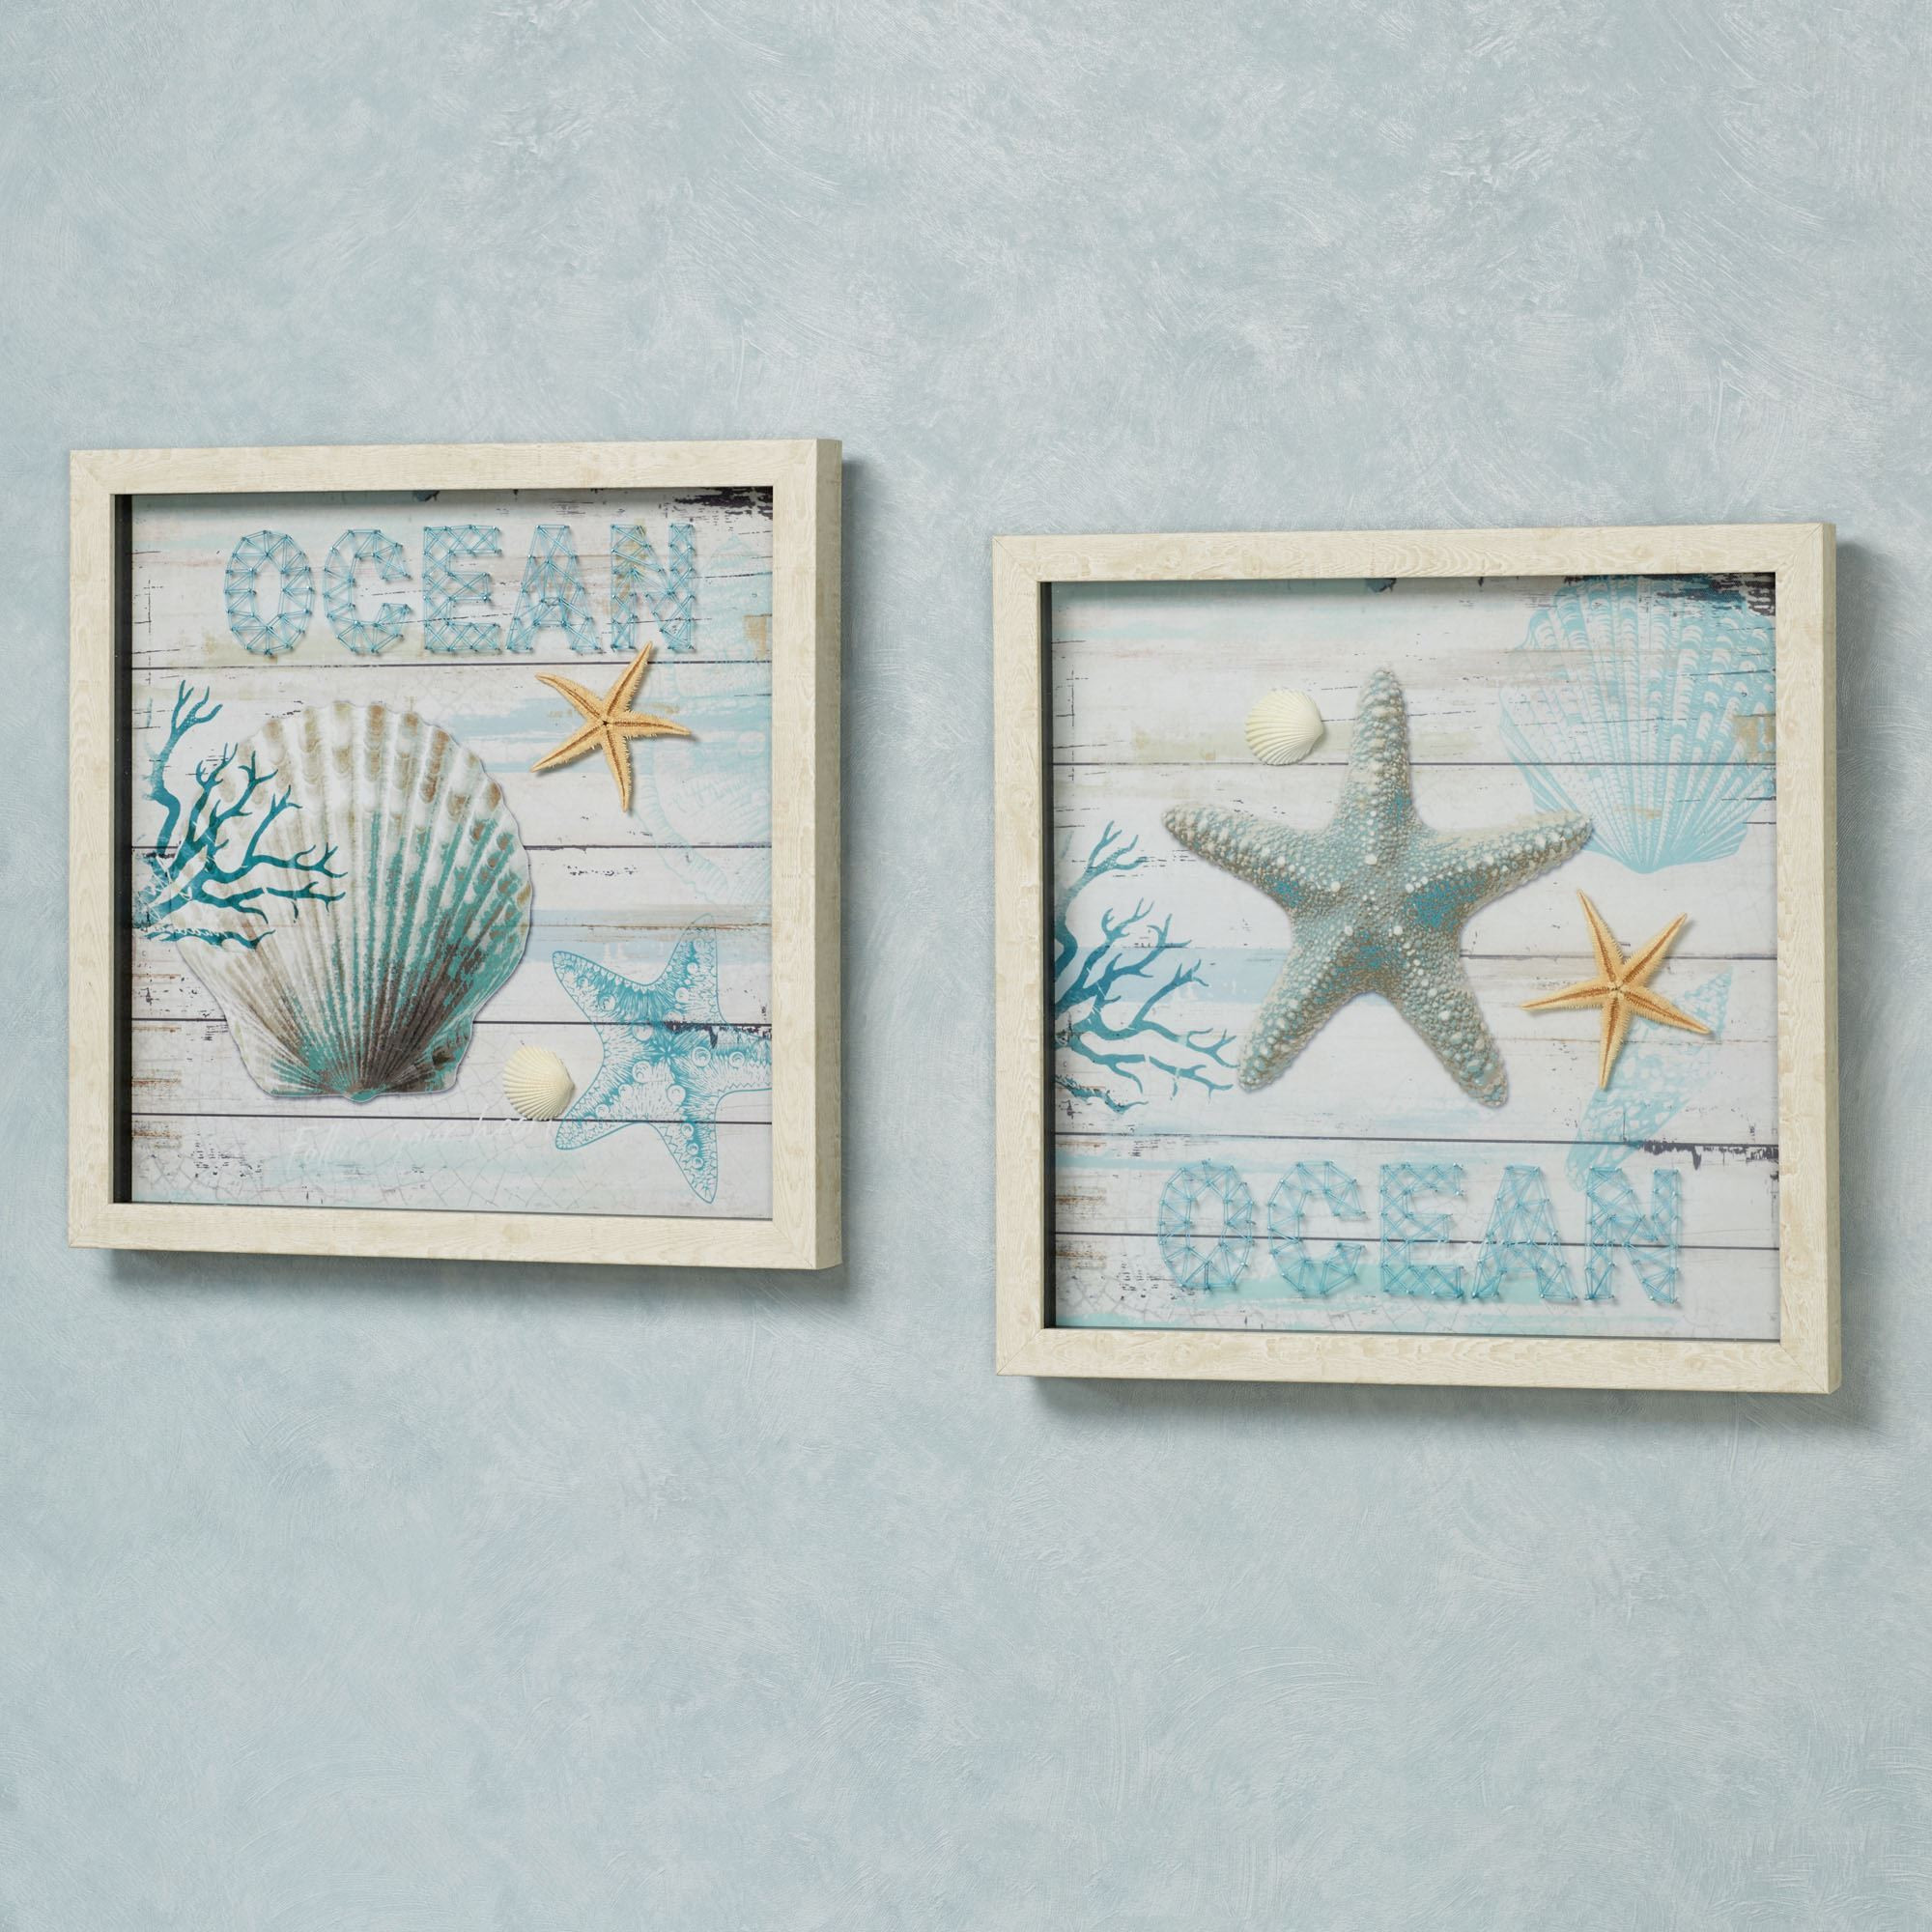 Best ideas about Ocean Wall Art
. Save or Pin Ocean Seashell Framed Wall Art Set Now.